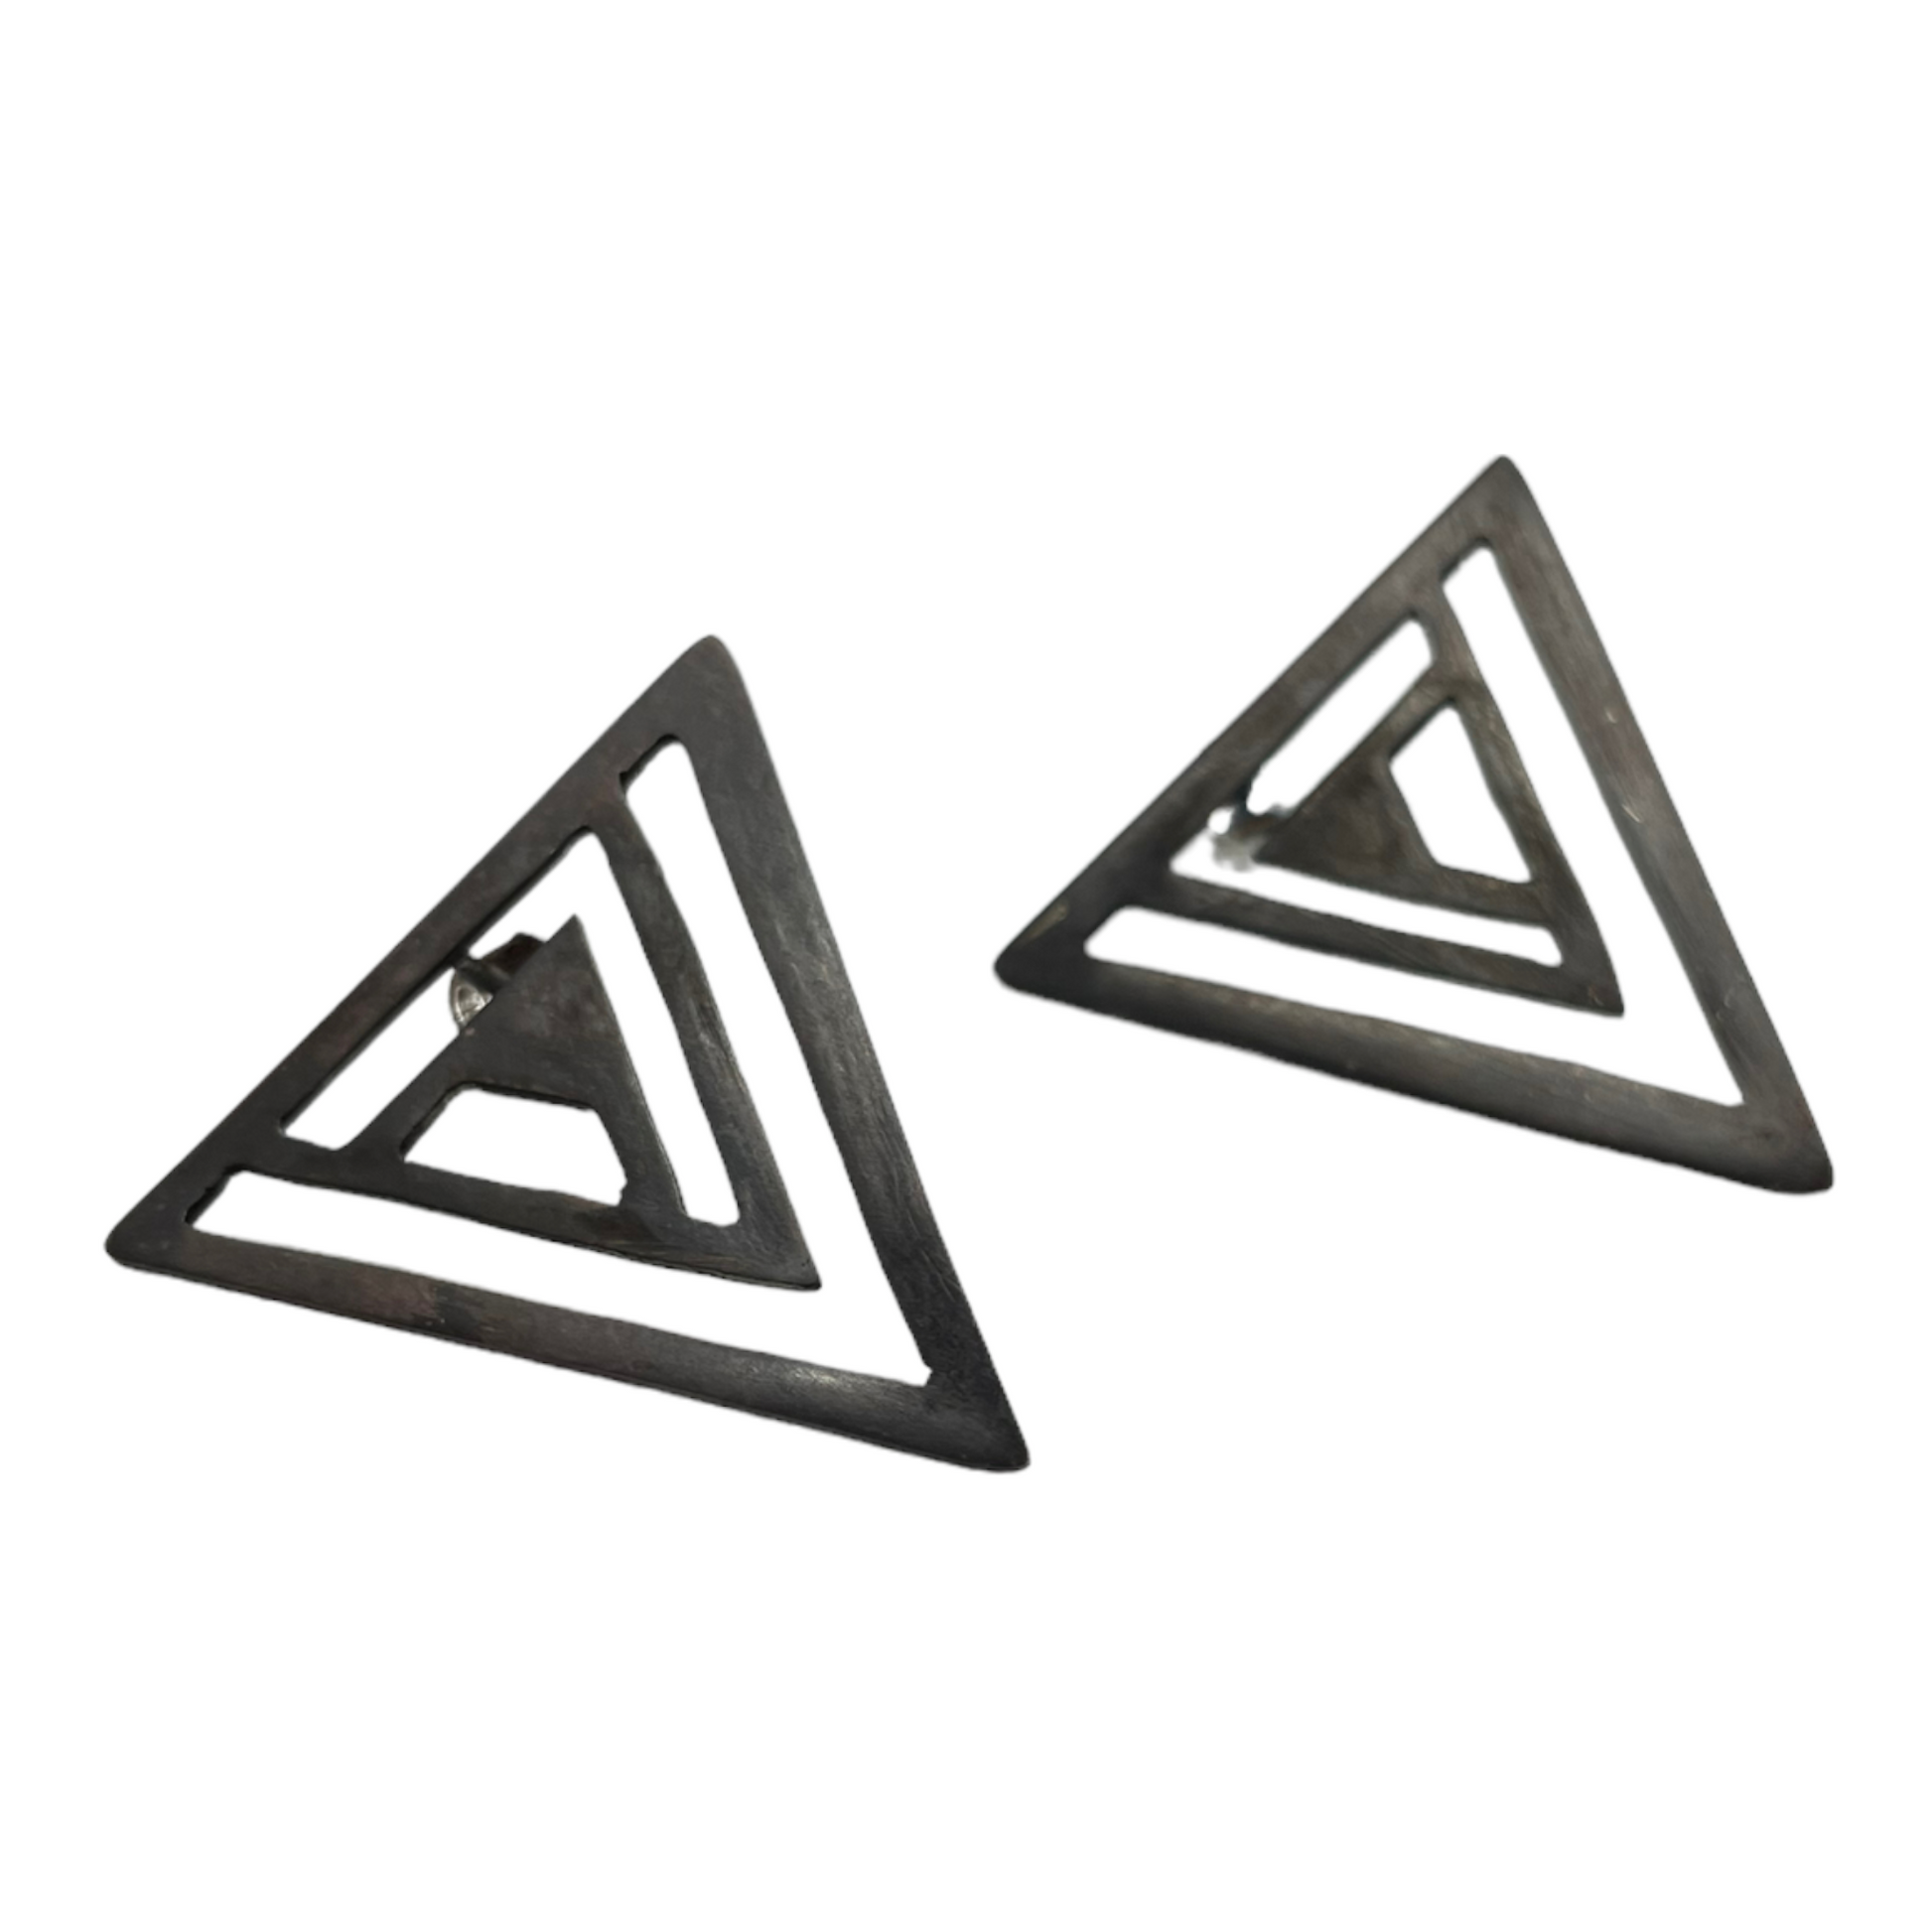 Oxidised brass earrings | Black Pyramides Earrings - CURIUDO